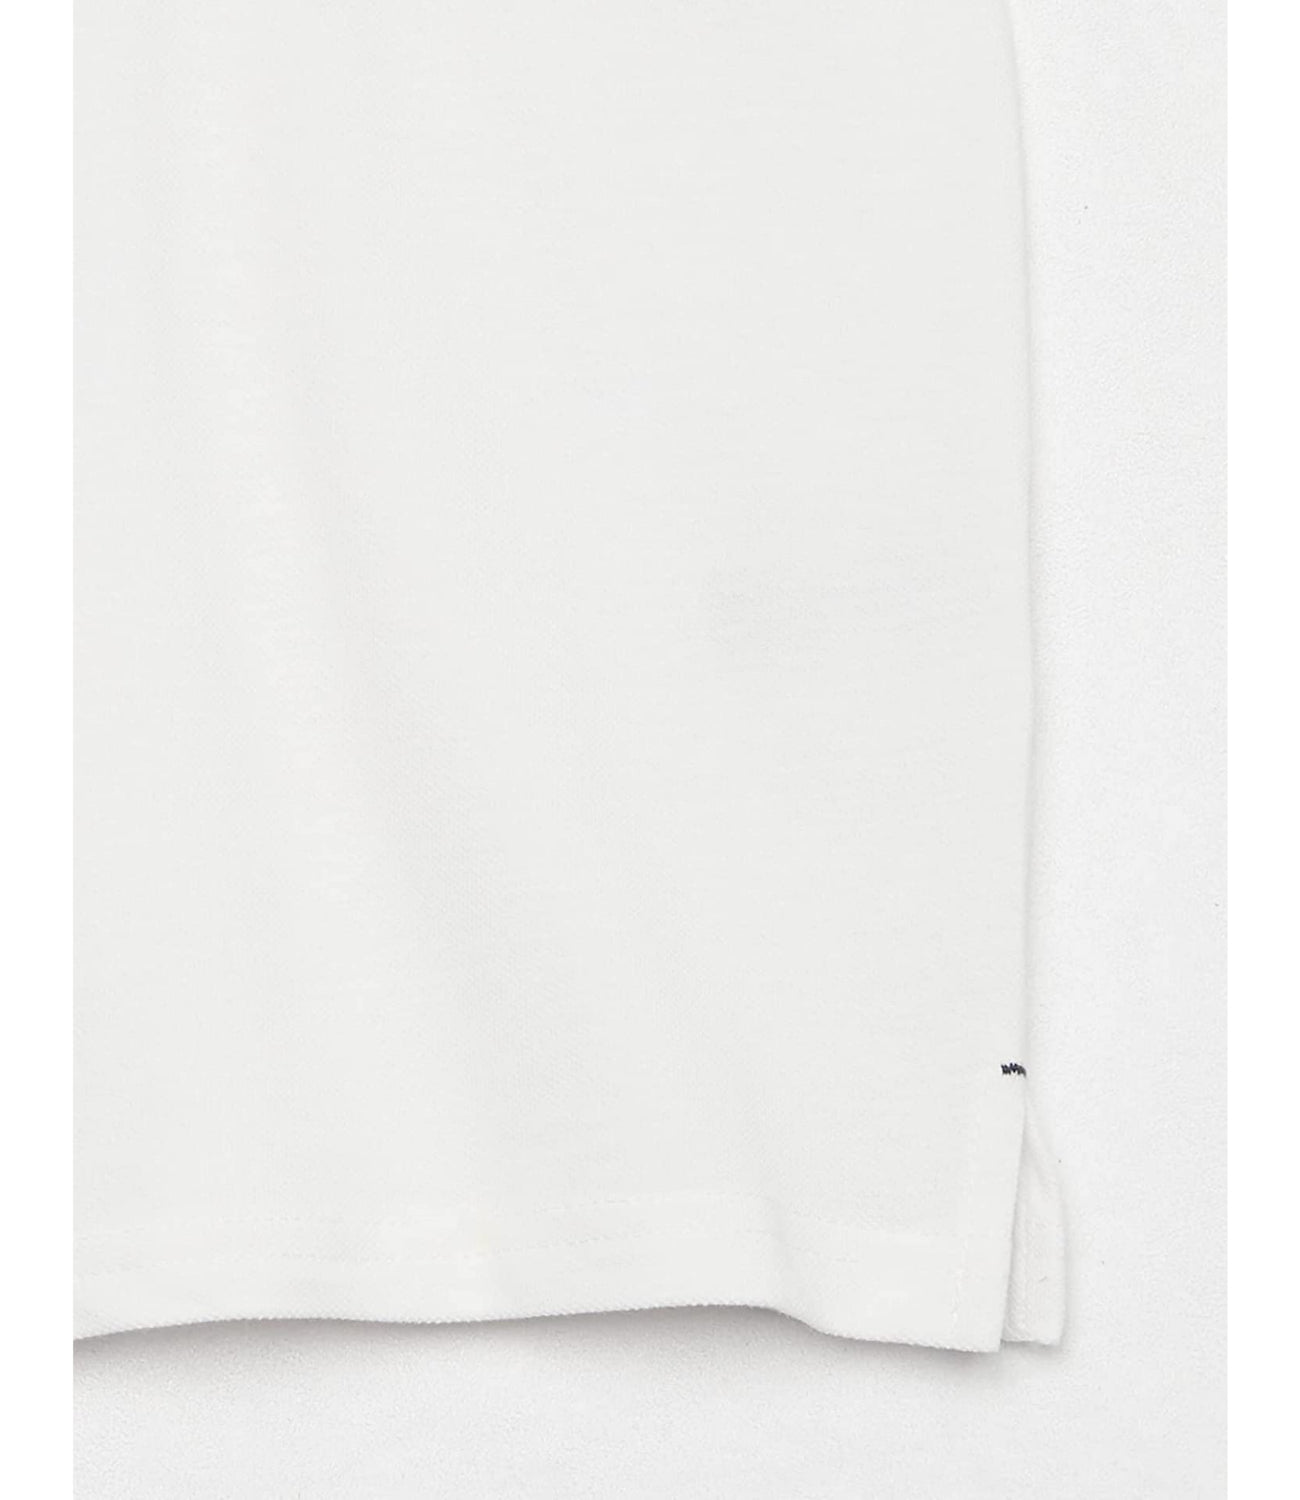 Tommy Hilfiger Boys 8-20 Short Sleeve Classic Logo Polo